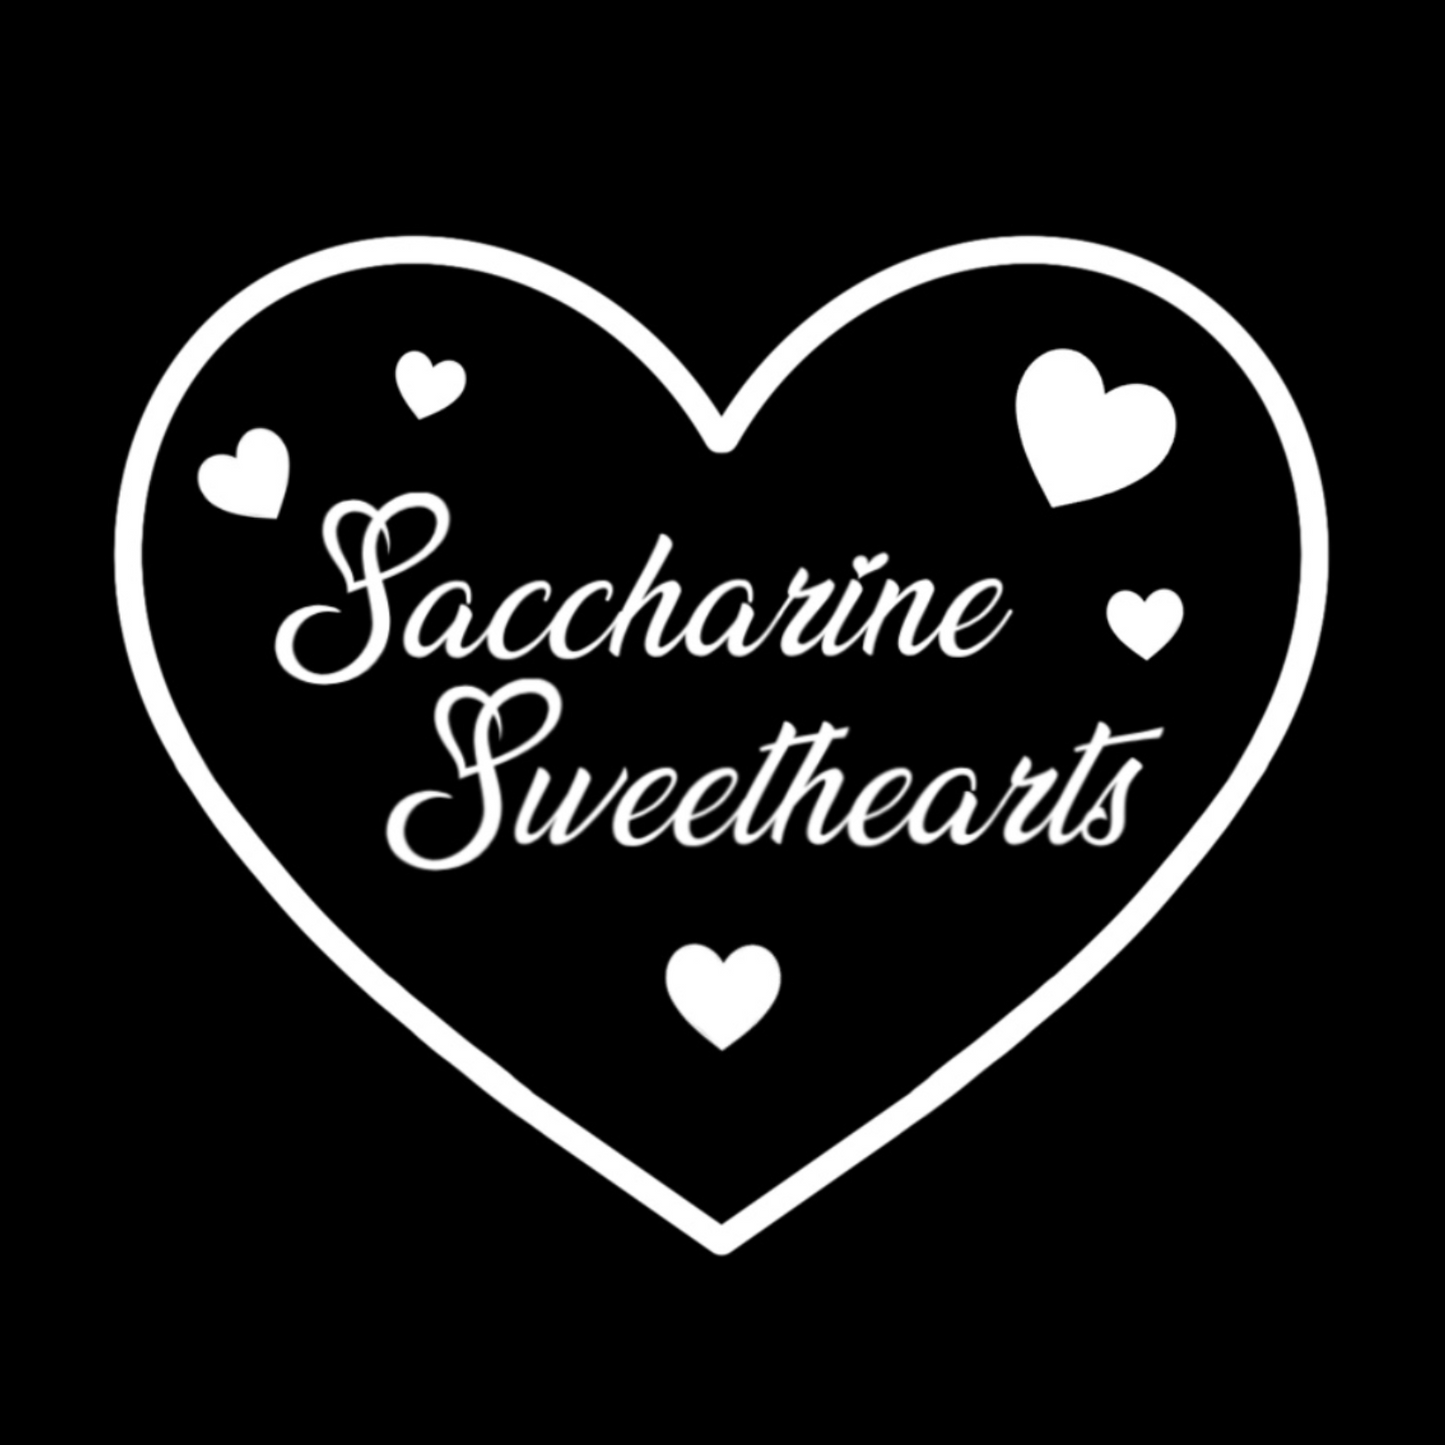 Saccharine Sweethearts Gift Card